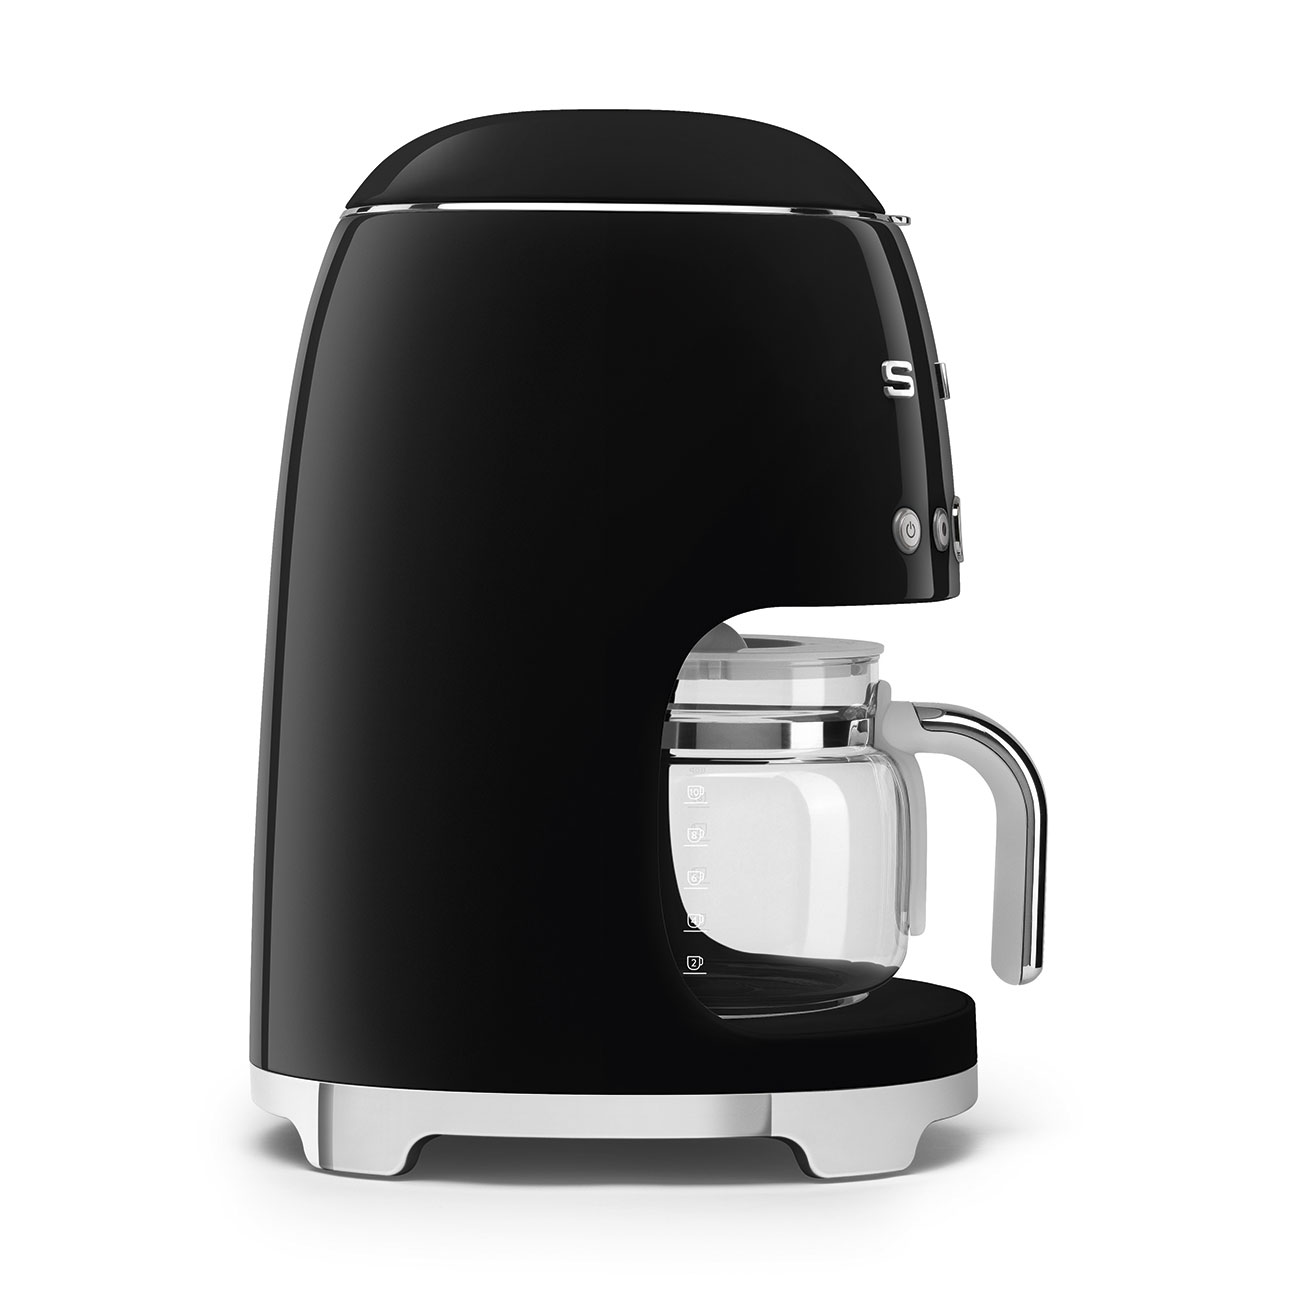 Black Drip Filter Coffee Machine - DCF02BLUK - Smeg_3